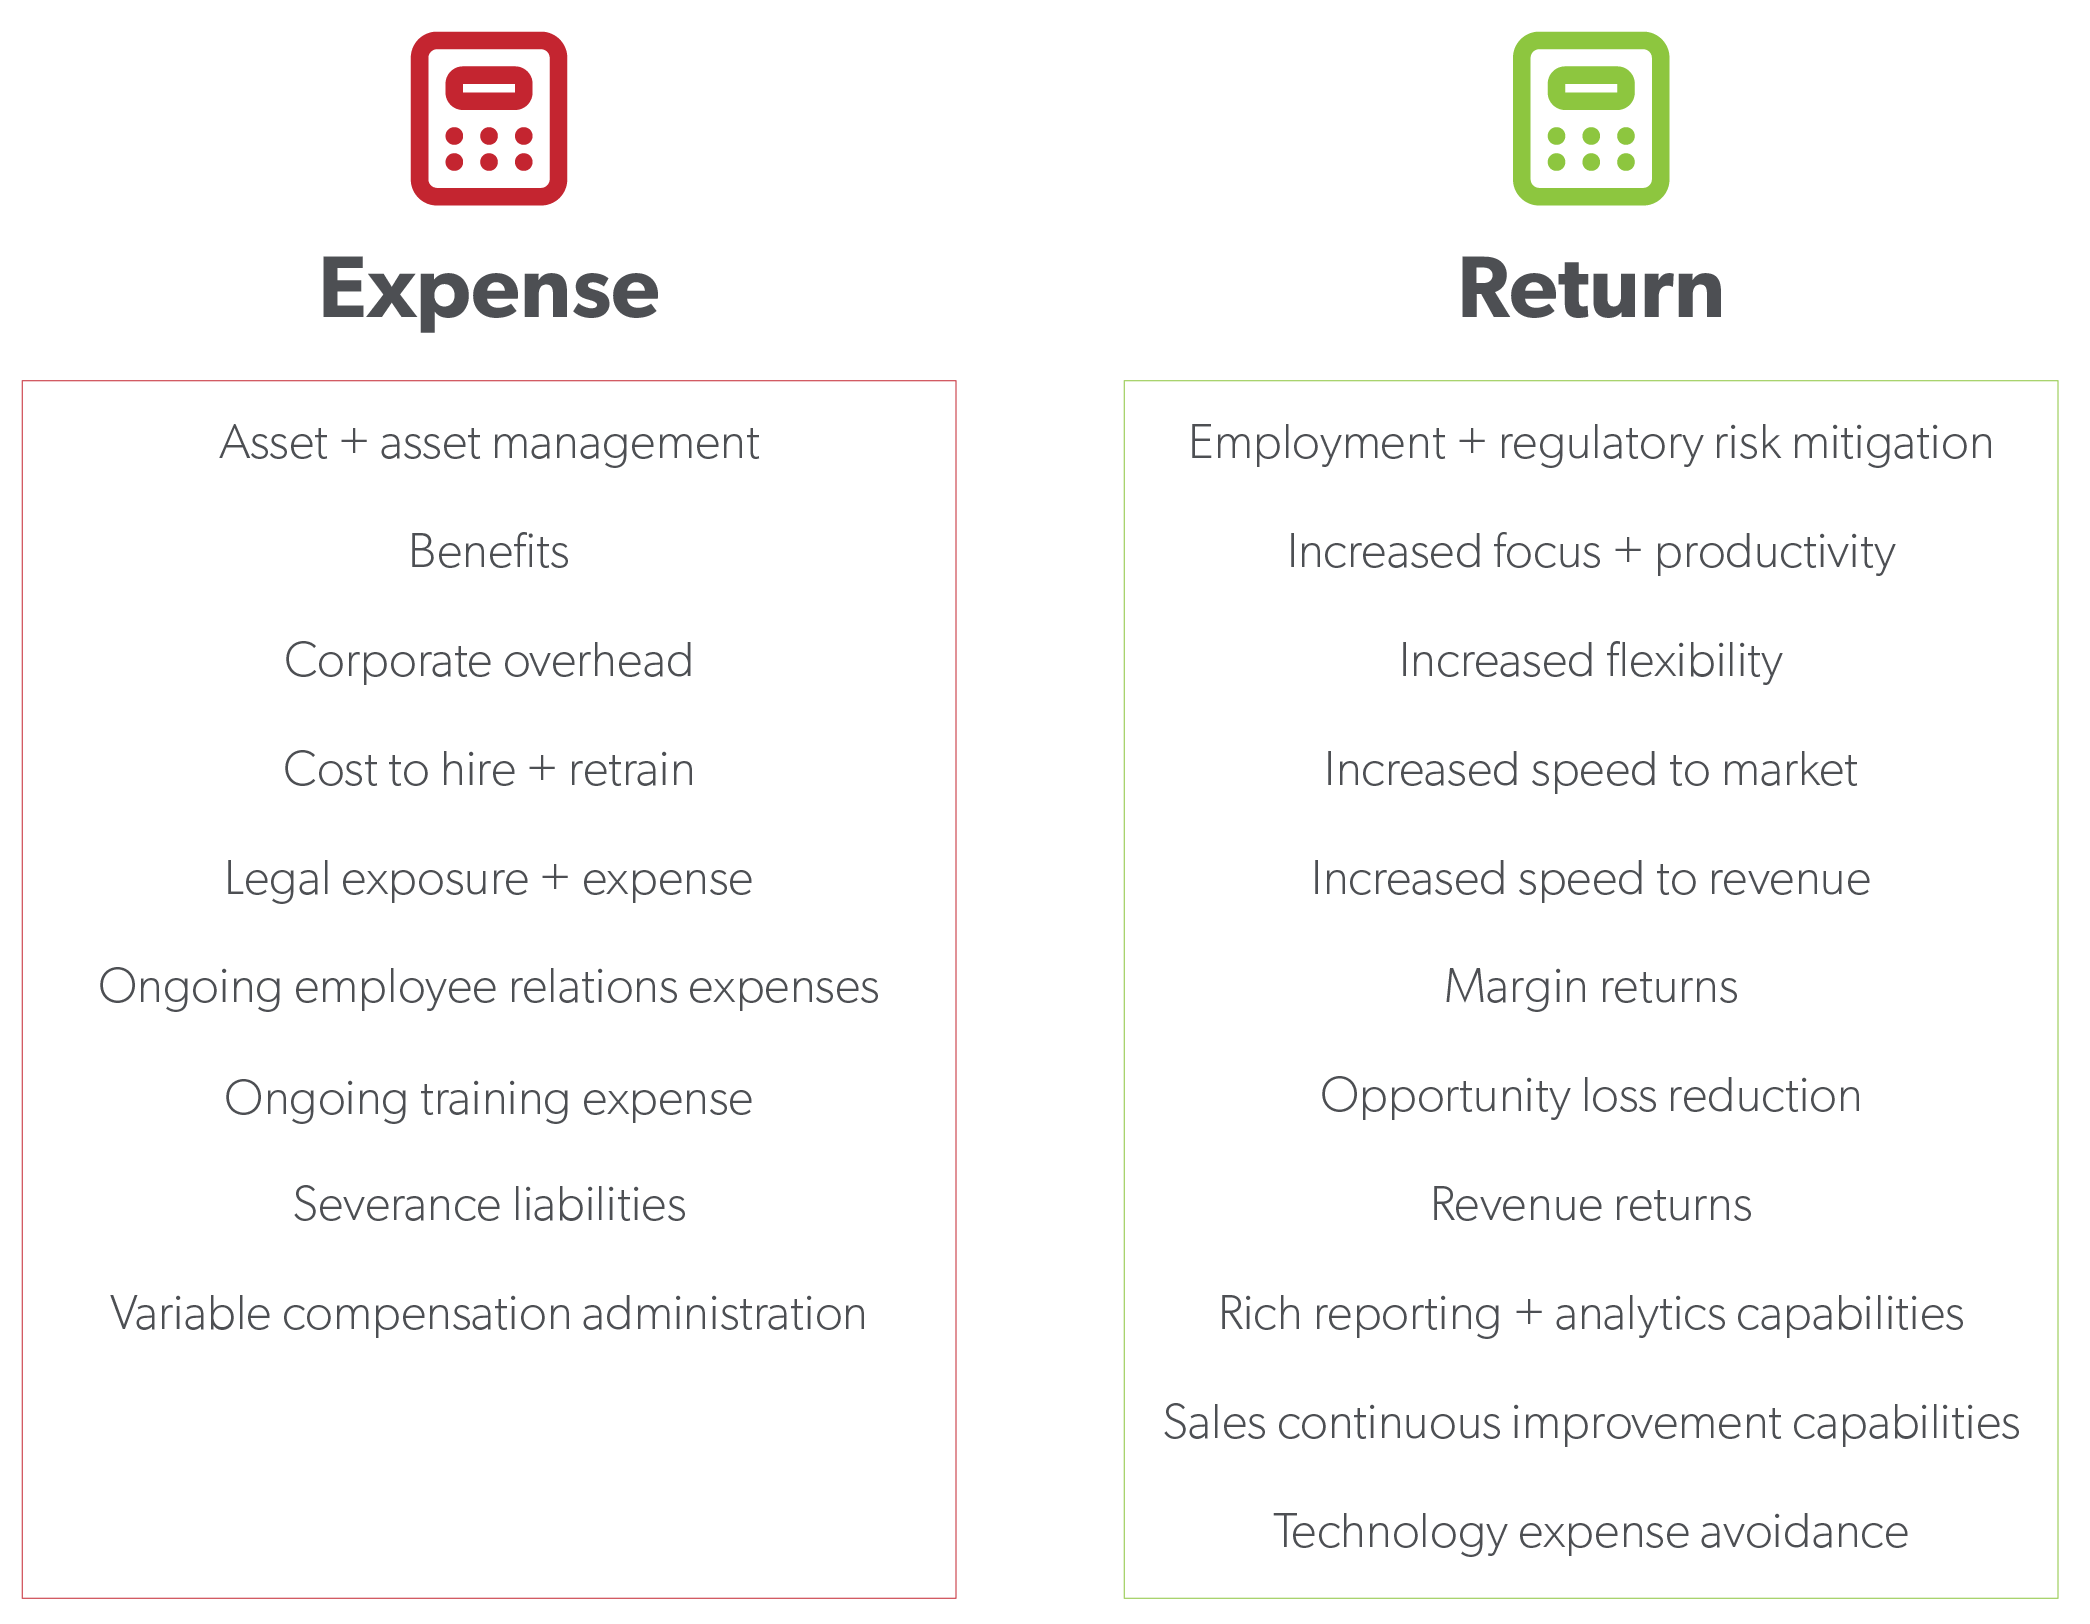 BPO Expense and Return chart